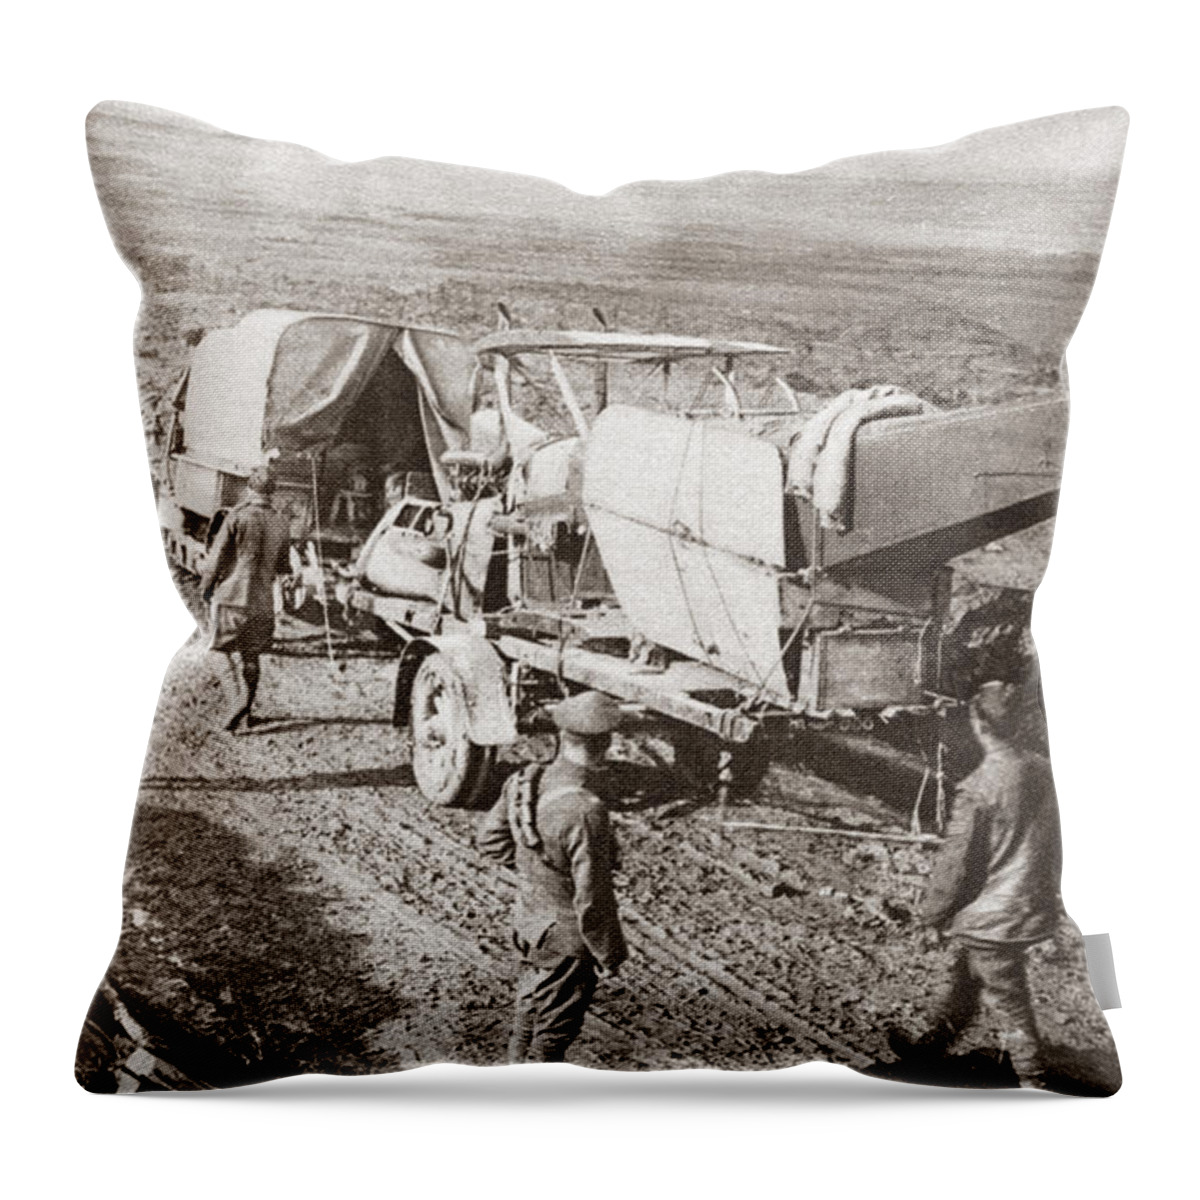 1914 Throw Pillow featuring the photograph World War I: Damaged Plane by Granger